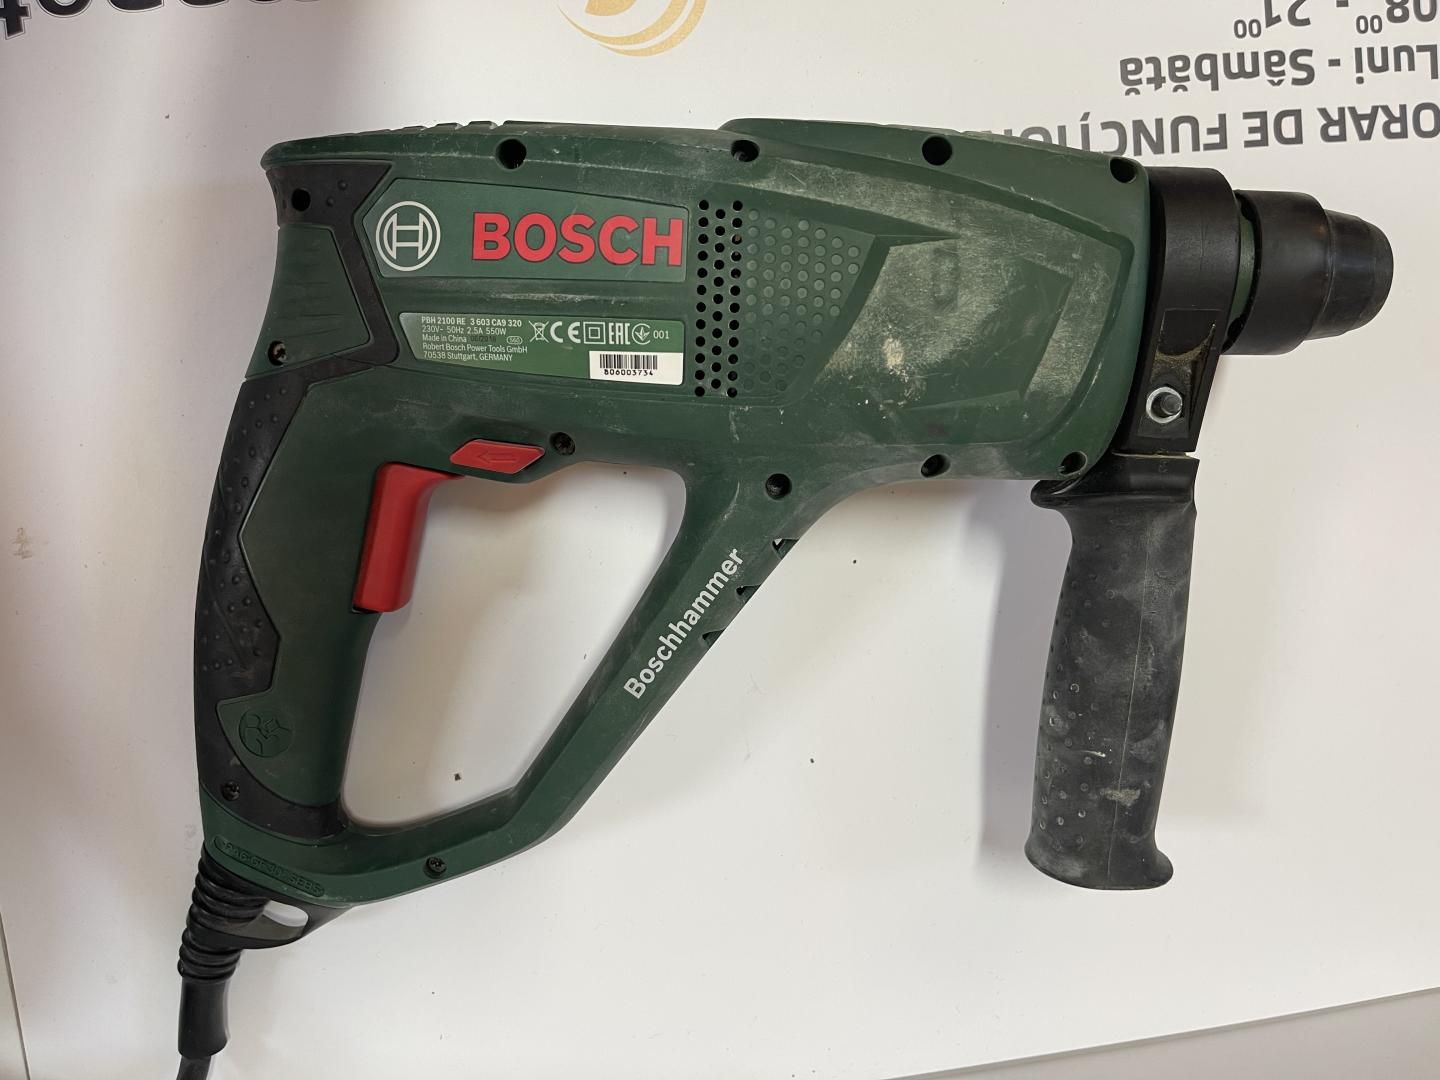 Ciocan rotopercutor Bosch PBH 2100 RE Compact, 550 W -P-